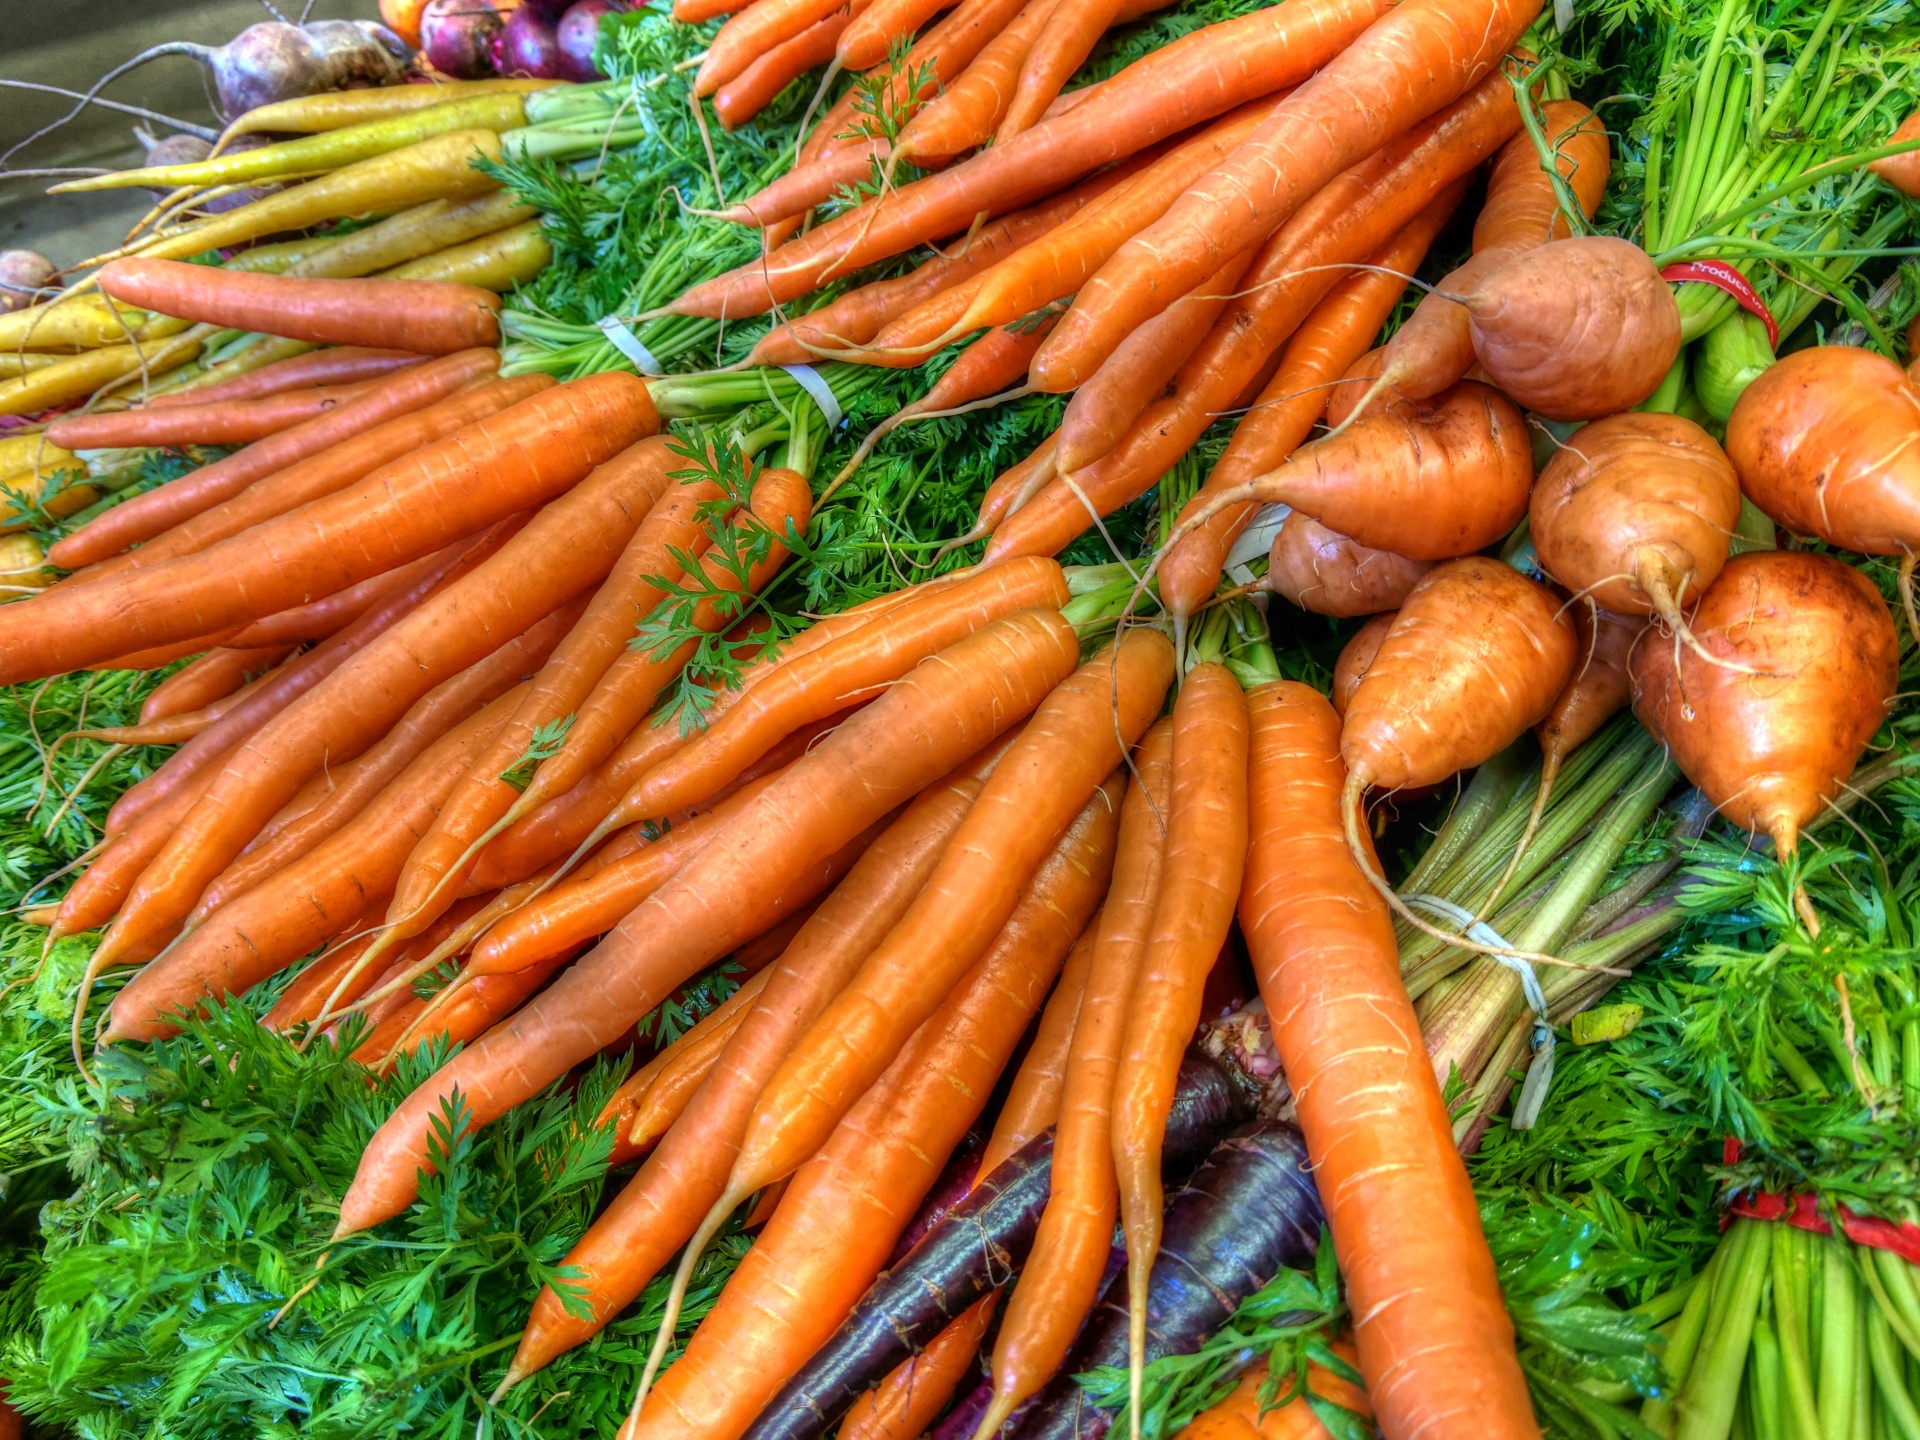 Download free photo of Carrot,karotat,vegetable,vegan,health - from needpix.com